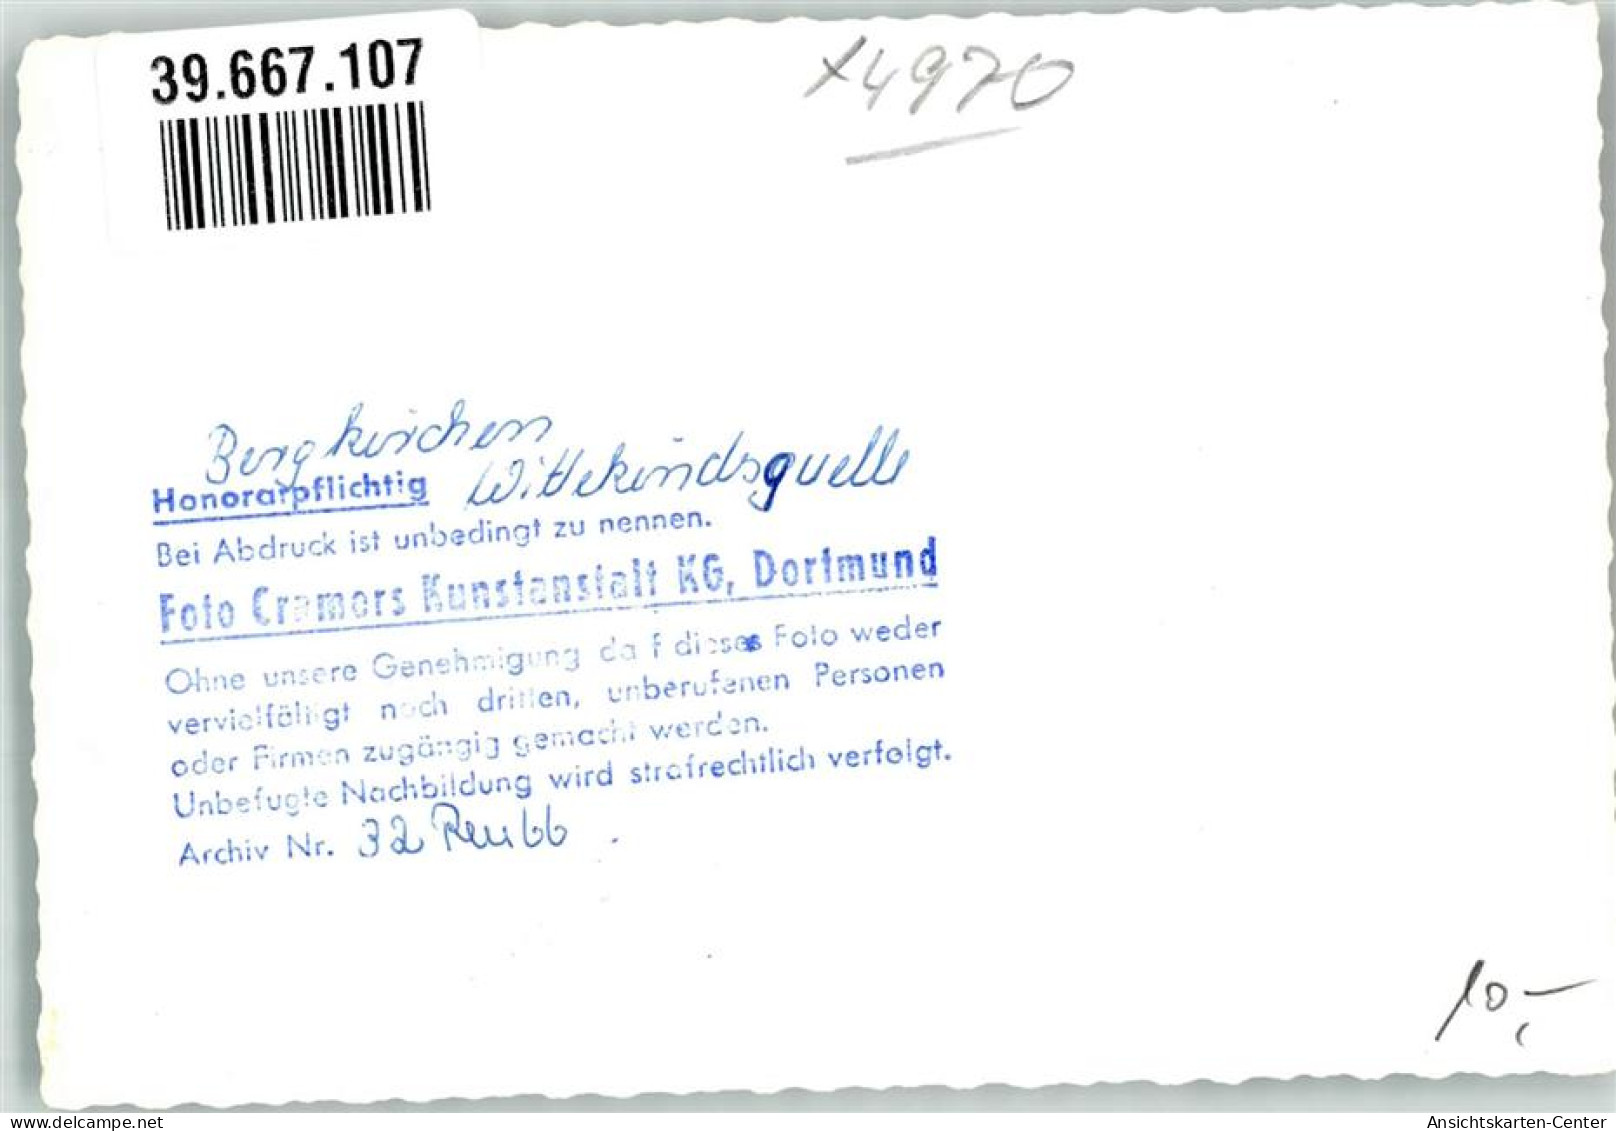 39667107 - Bad Oeynhausen - Bad Oeynhausen